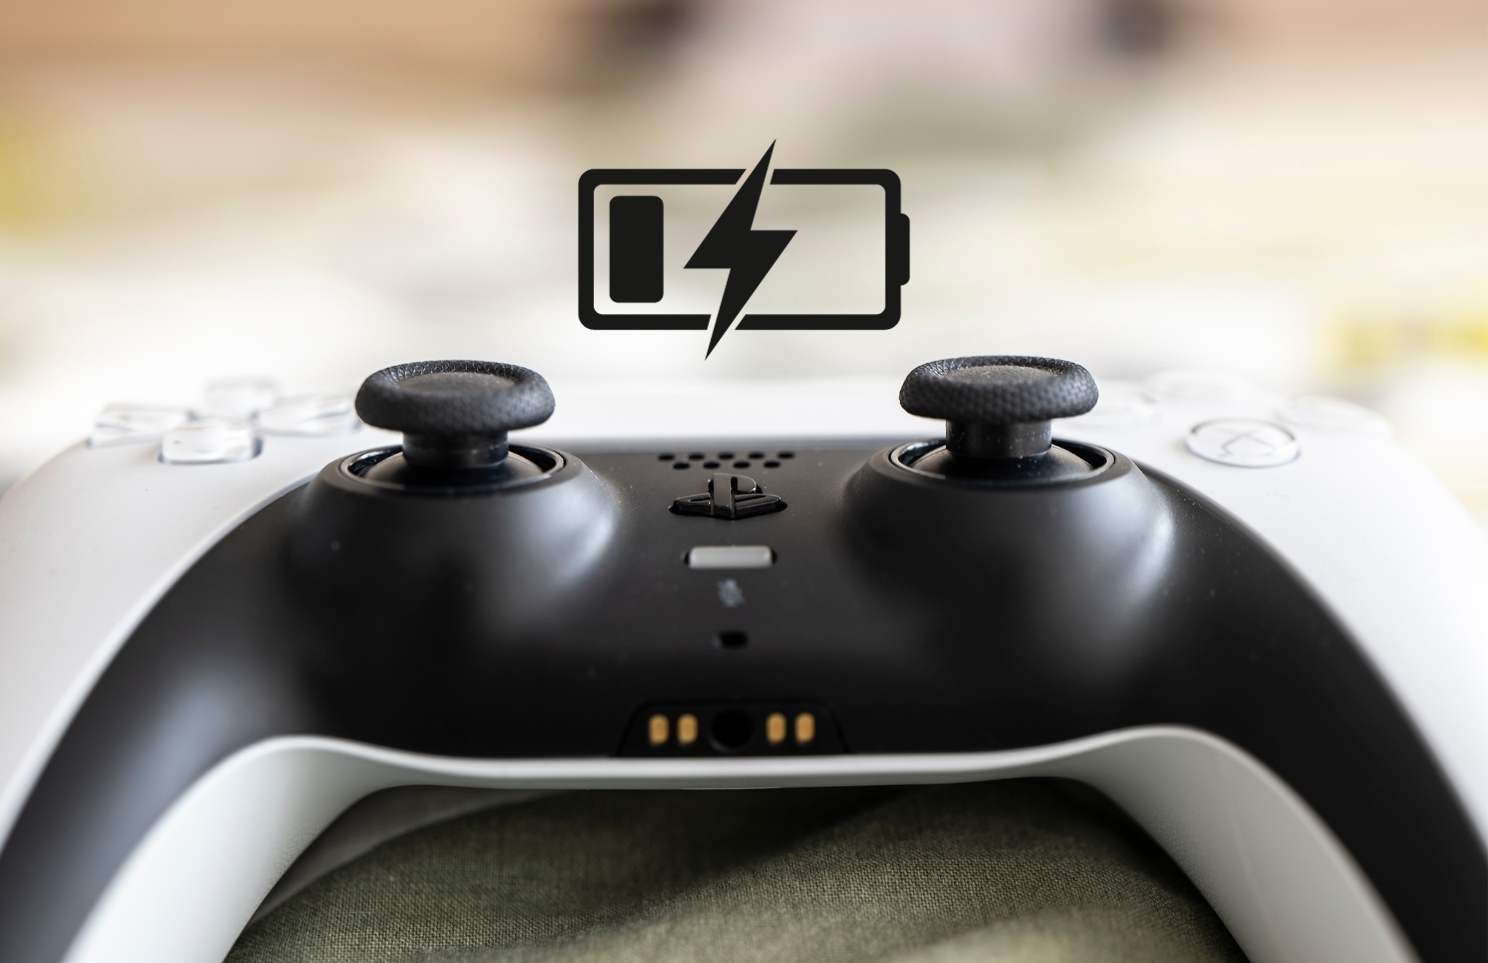 PS5-Controller Akkulaufzeit optimieren: Tipps für längeres Spielen